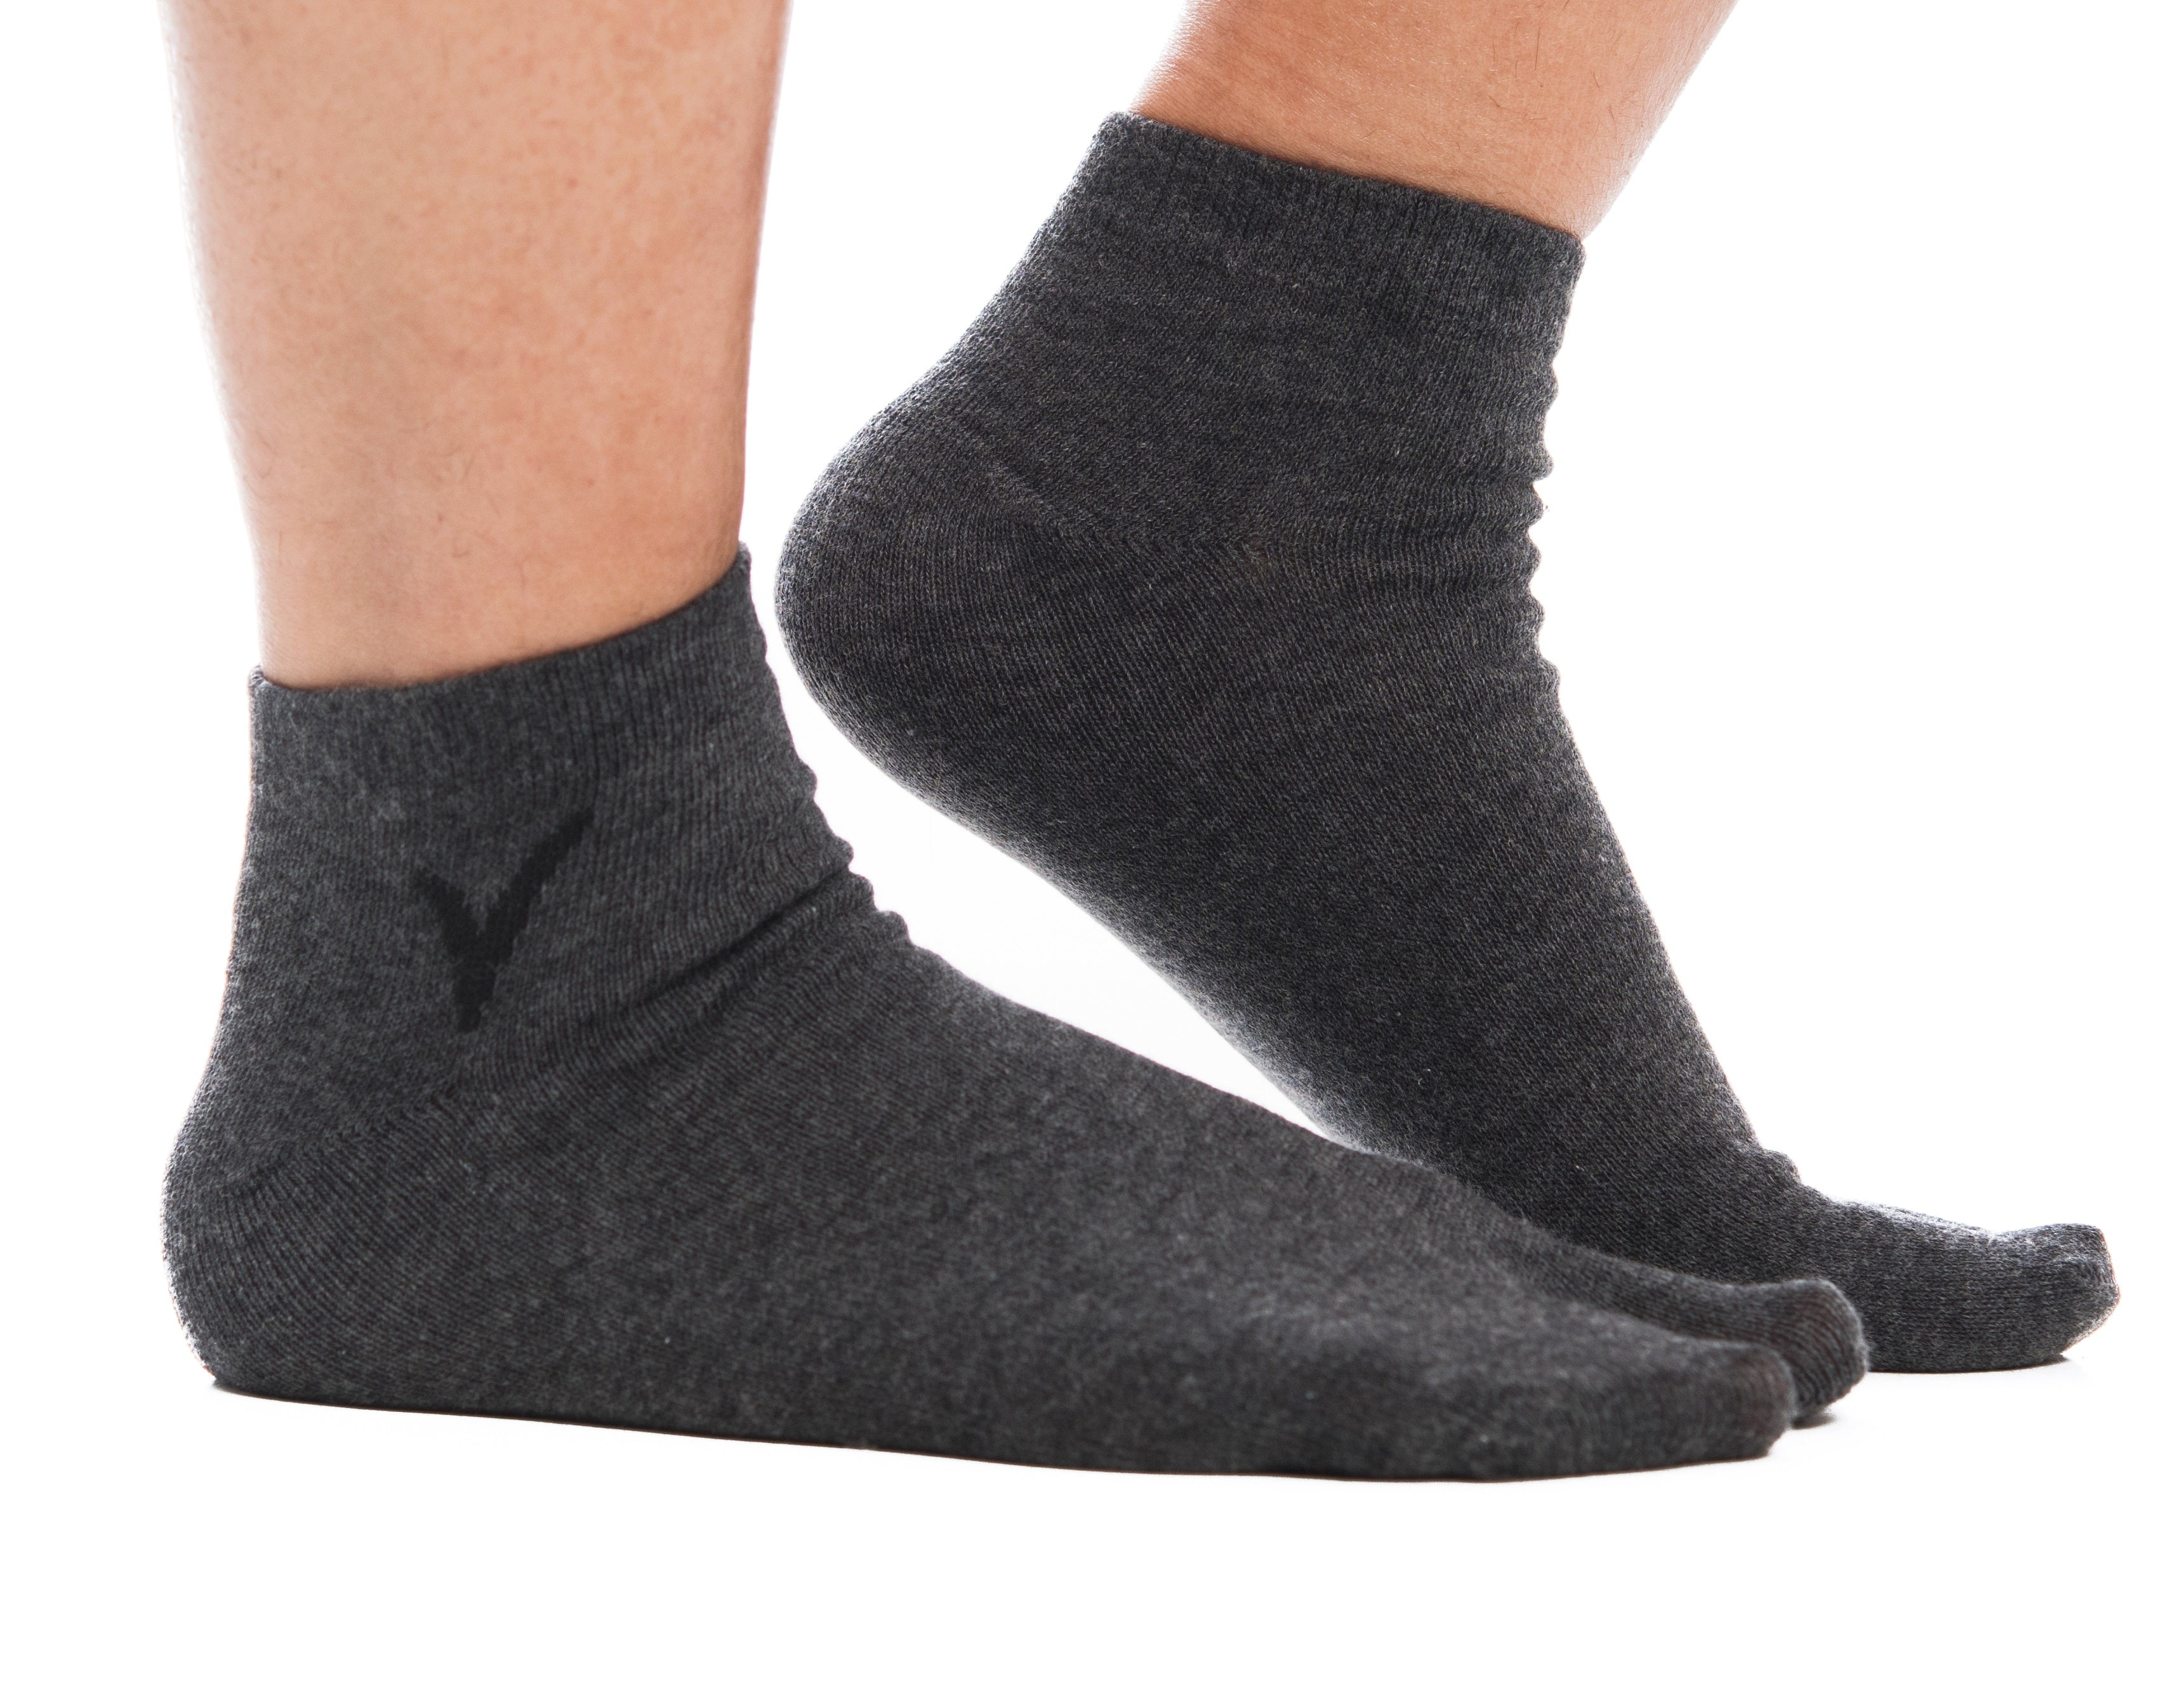 Love Socks Womens Ankle Socks 3 Pair Awareness Survivor Ribbon Print Gray NWT $5